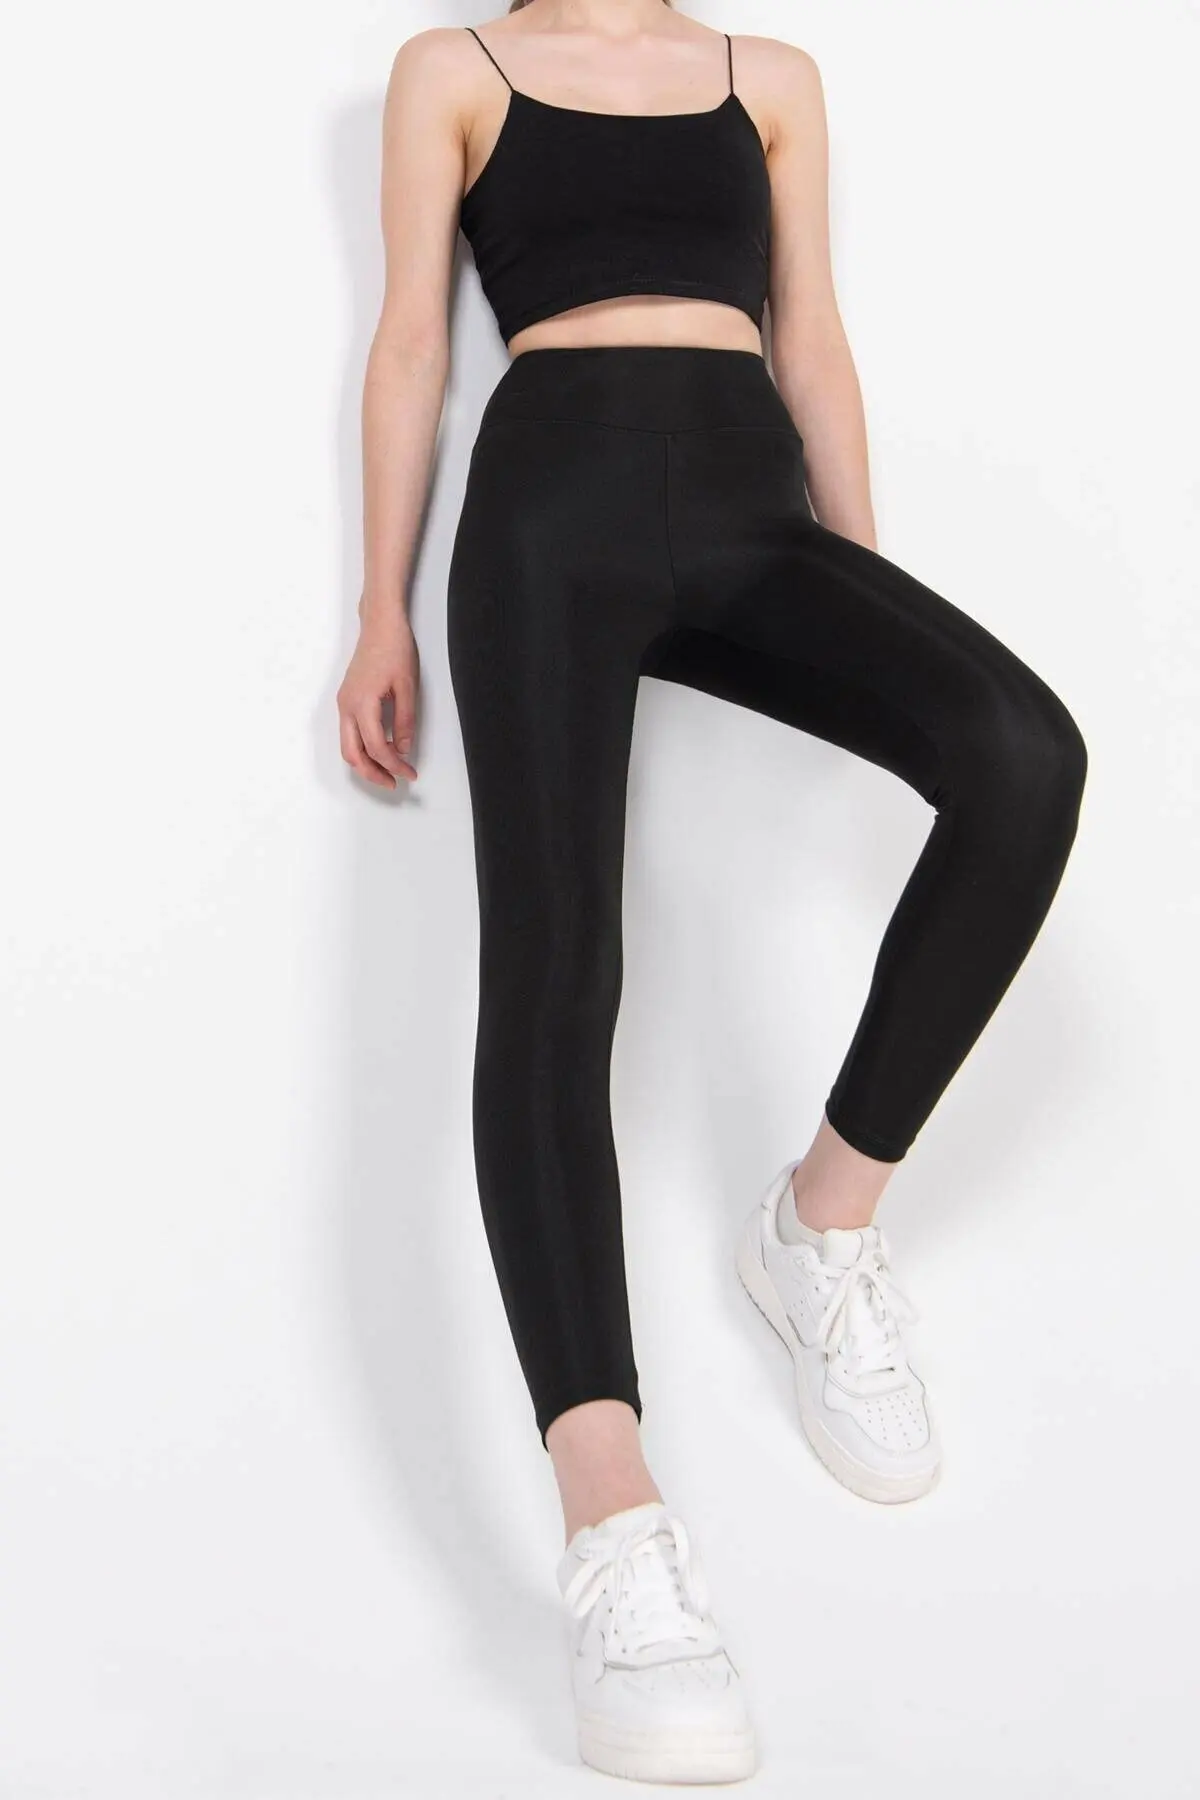 women's-high-waist-stretchy-and-toparlayıcı-bilekte-sports-leggings-black